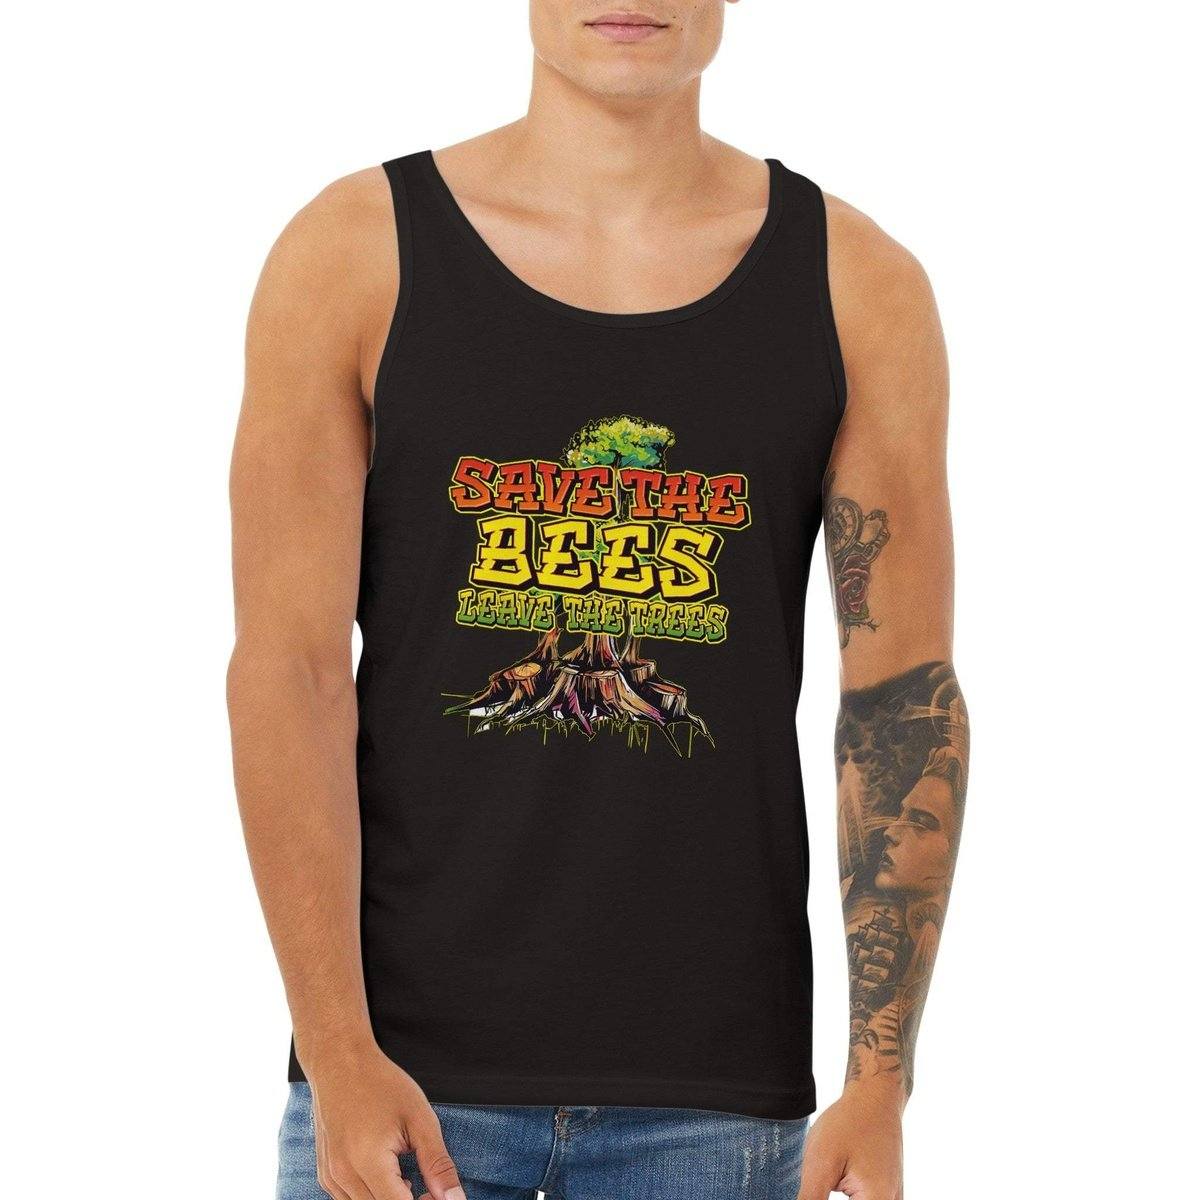 Save The Bees Tank Top - Leave The Trees - Stumps - Premium Unisex Tank Top Australia Online Color Black / XS